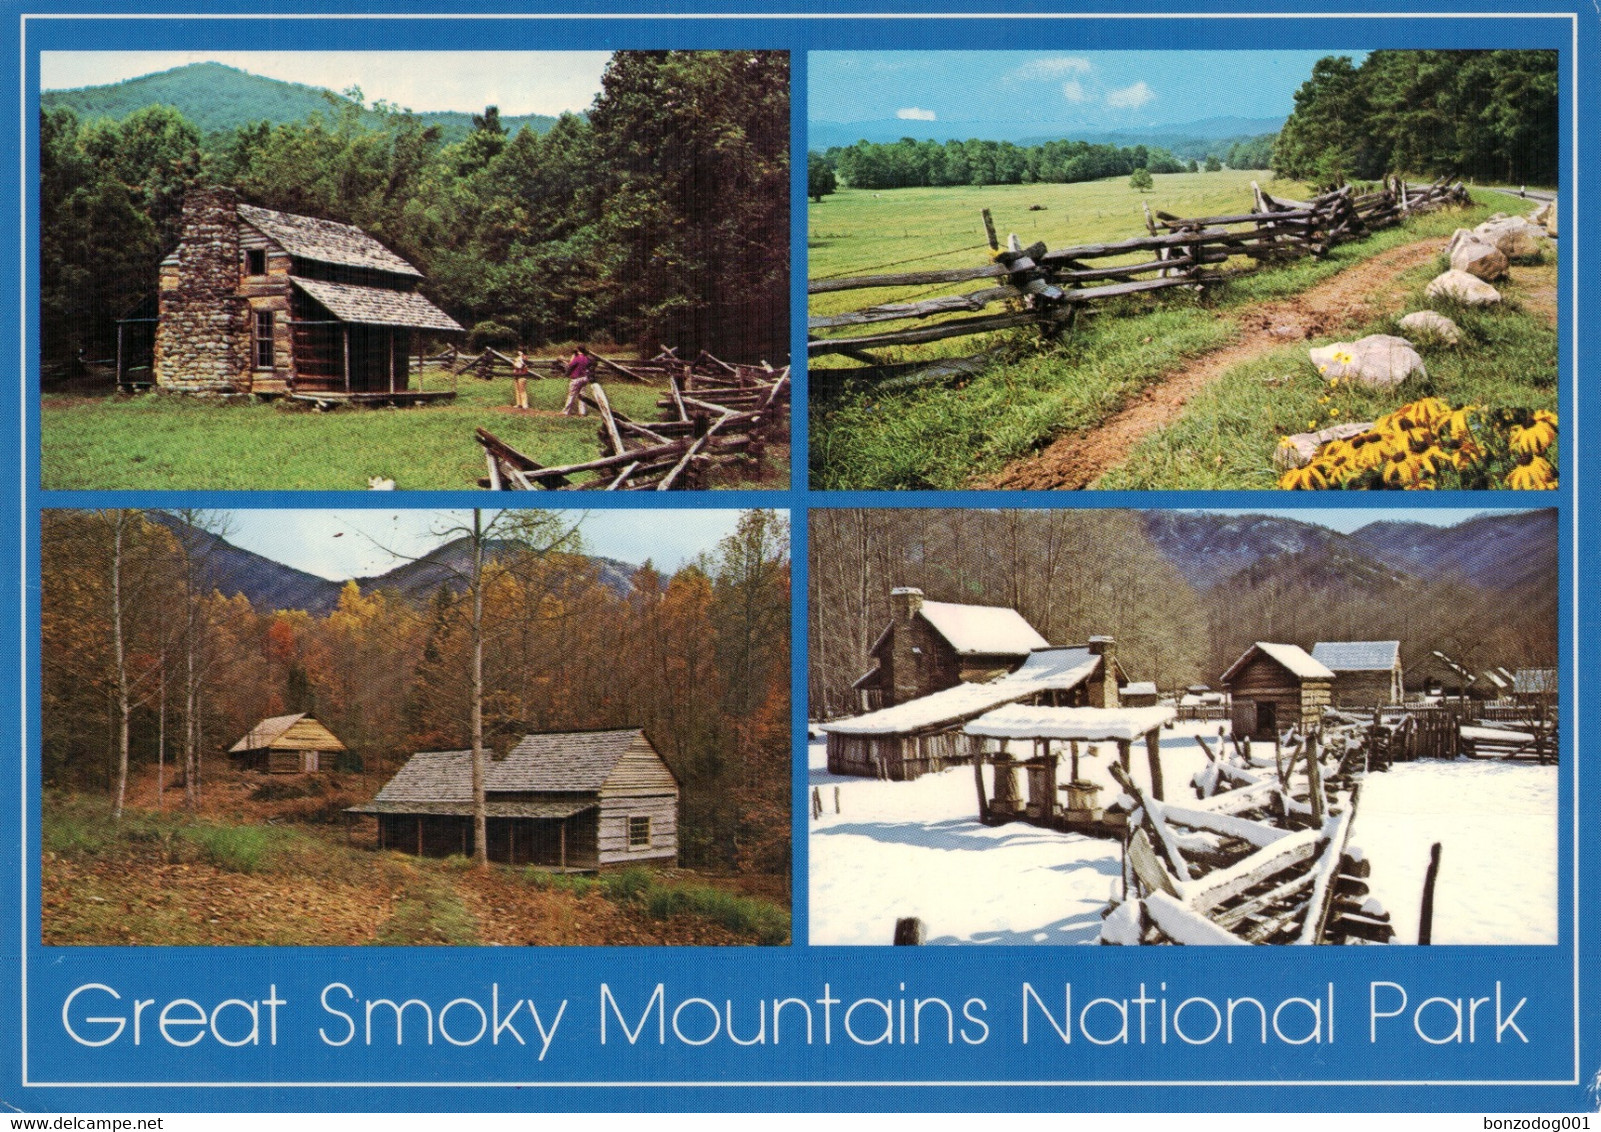 Great Smoky Mountains National Park U.S.A. Oconaluftee Pioneer Village - Smokey Mountains